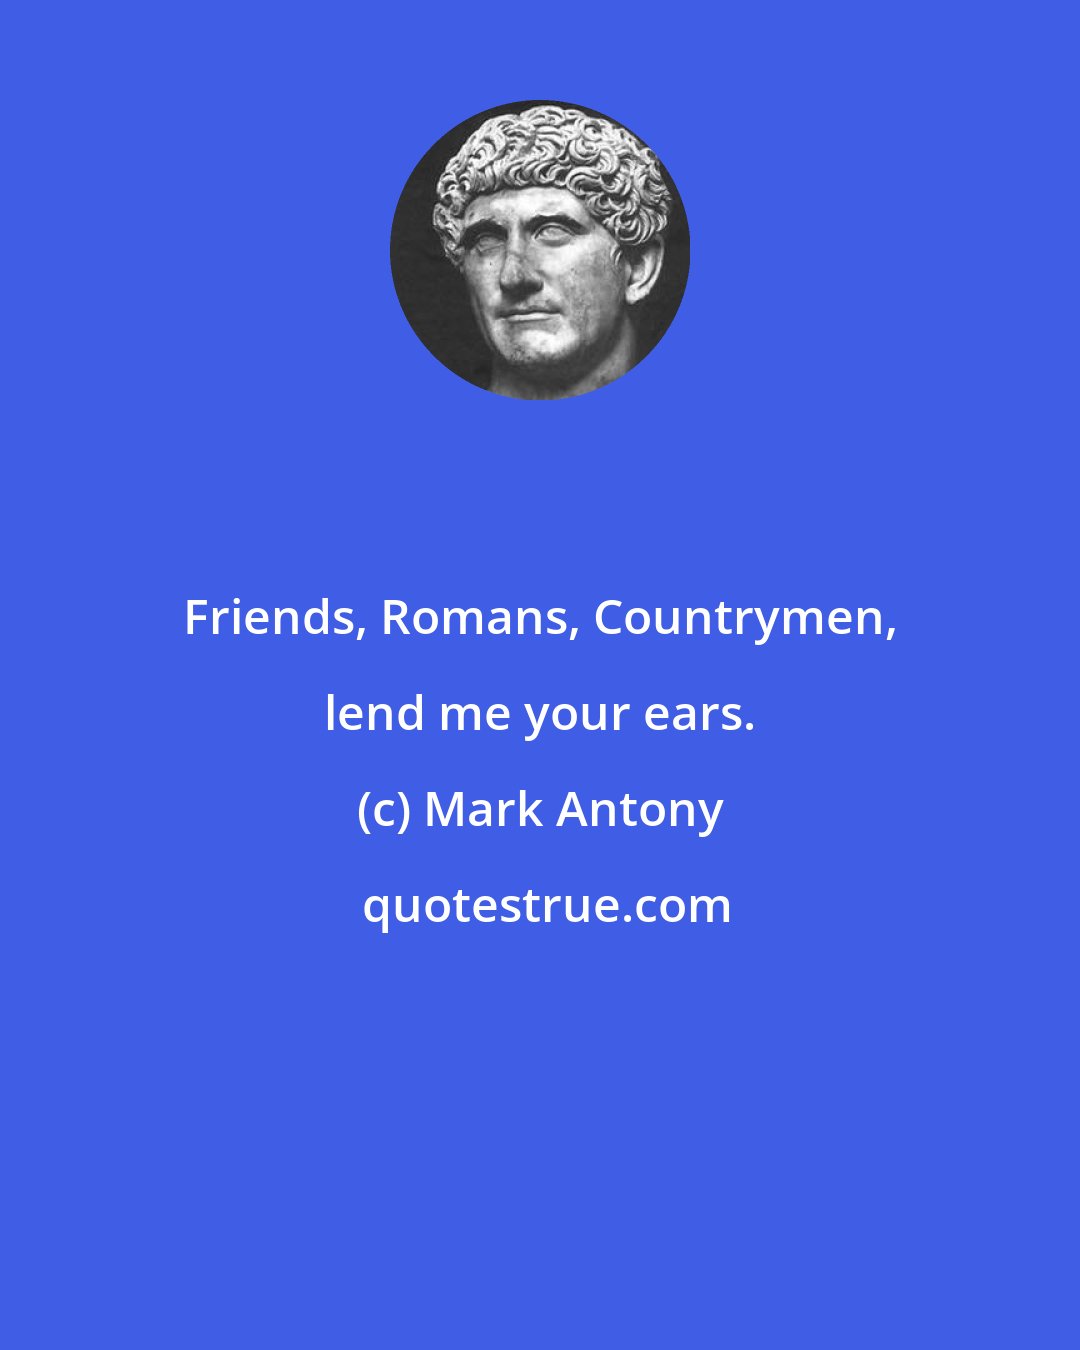 Mark Antony: Friends, Romans, Countrymen, lend me your ears.